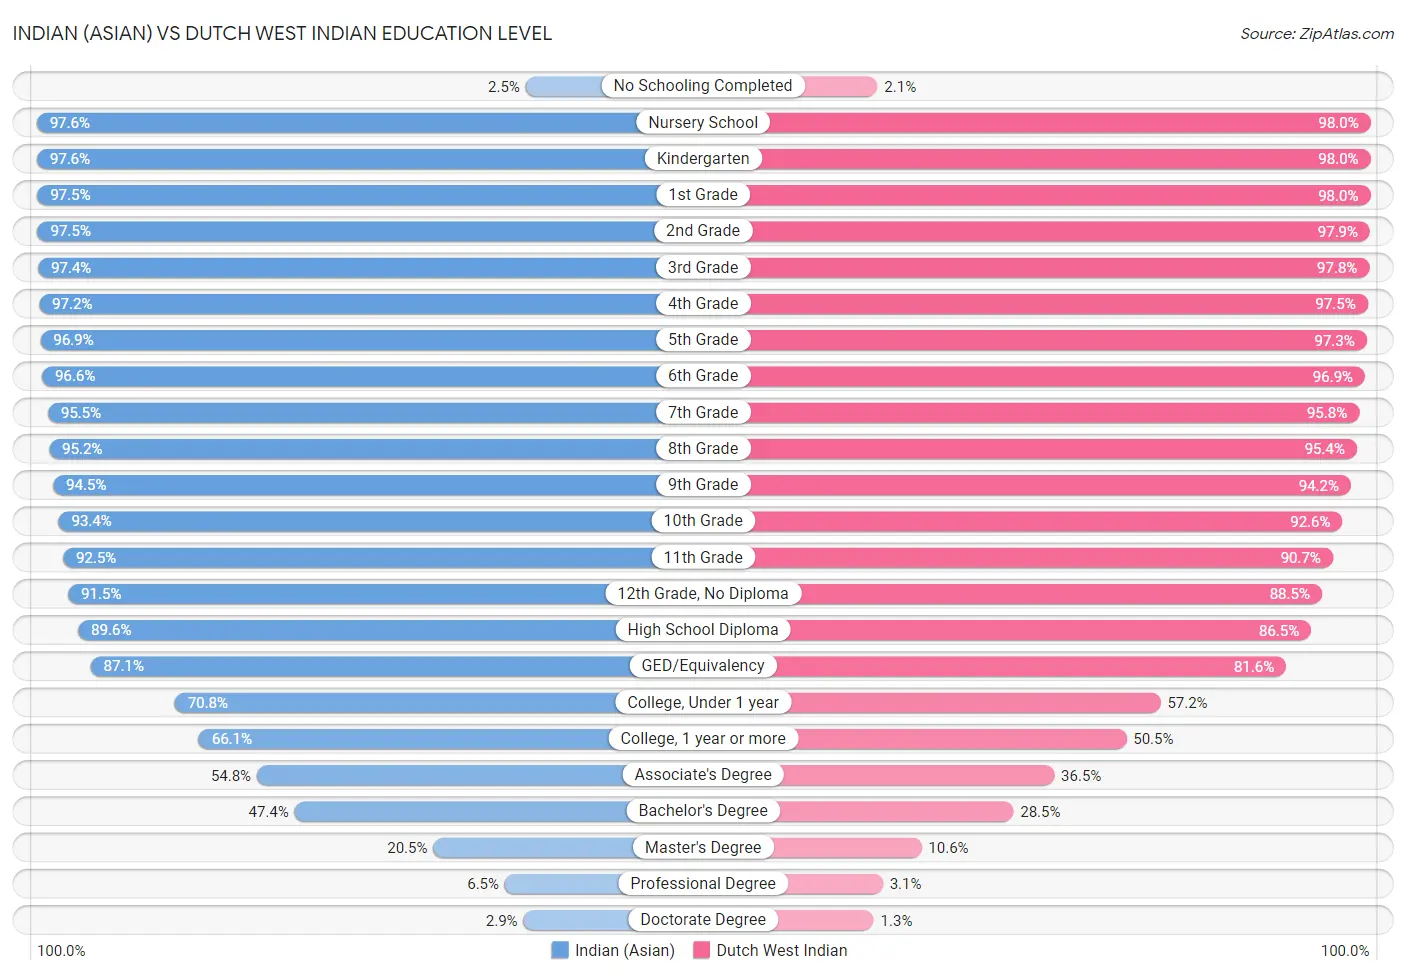 Indian (Asian) vs Dutch West Indian Education Level